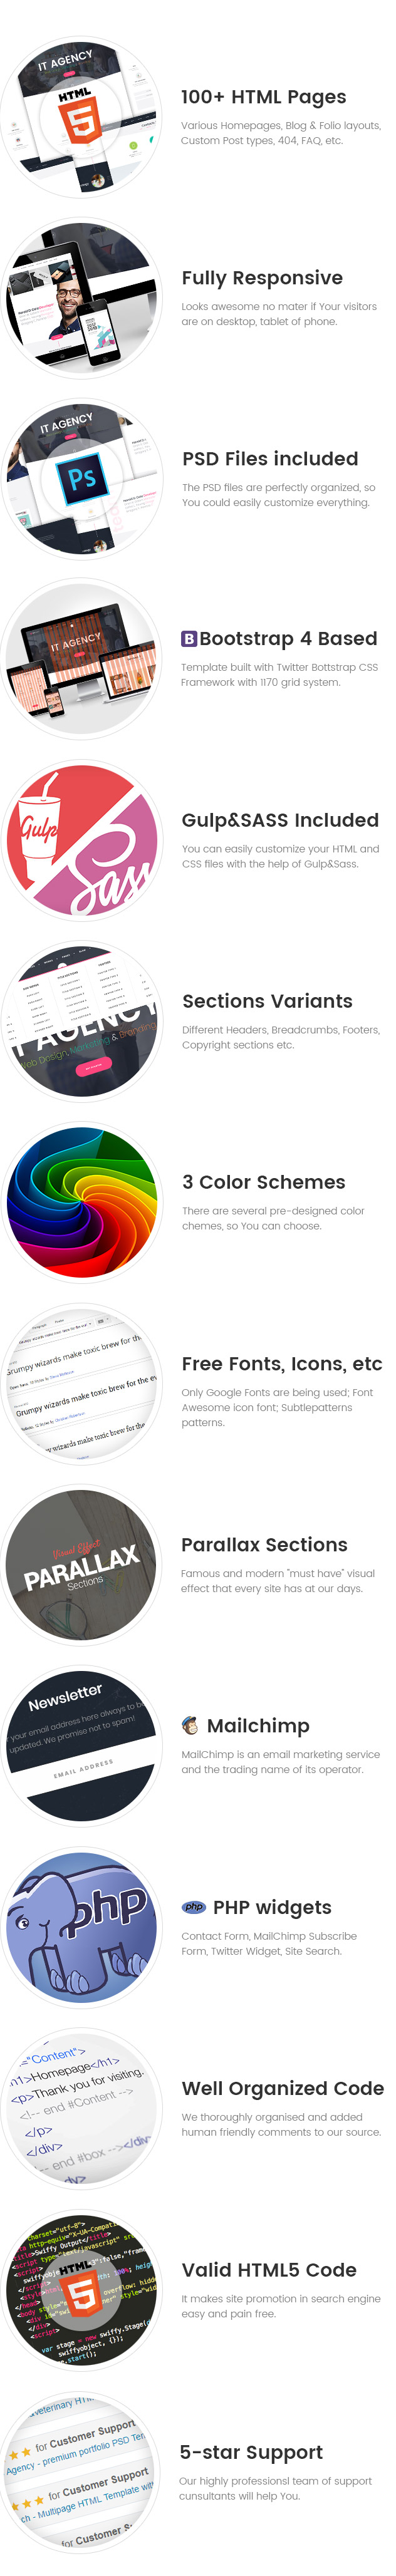 DotCreative – Web Design And Marketing Agency HTML Template